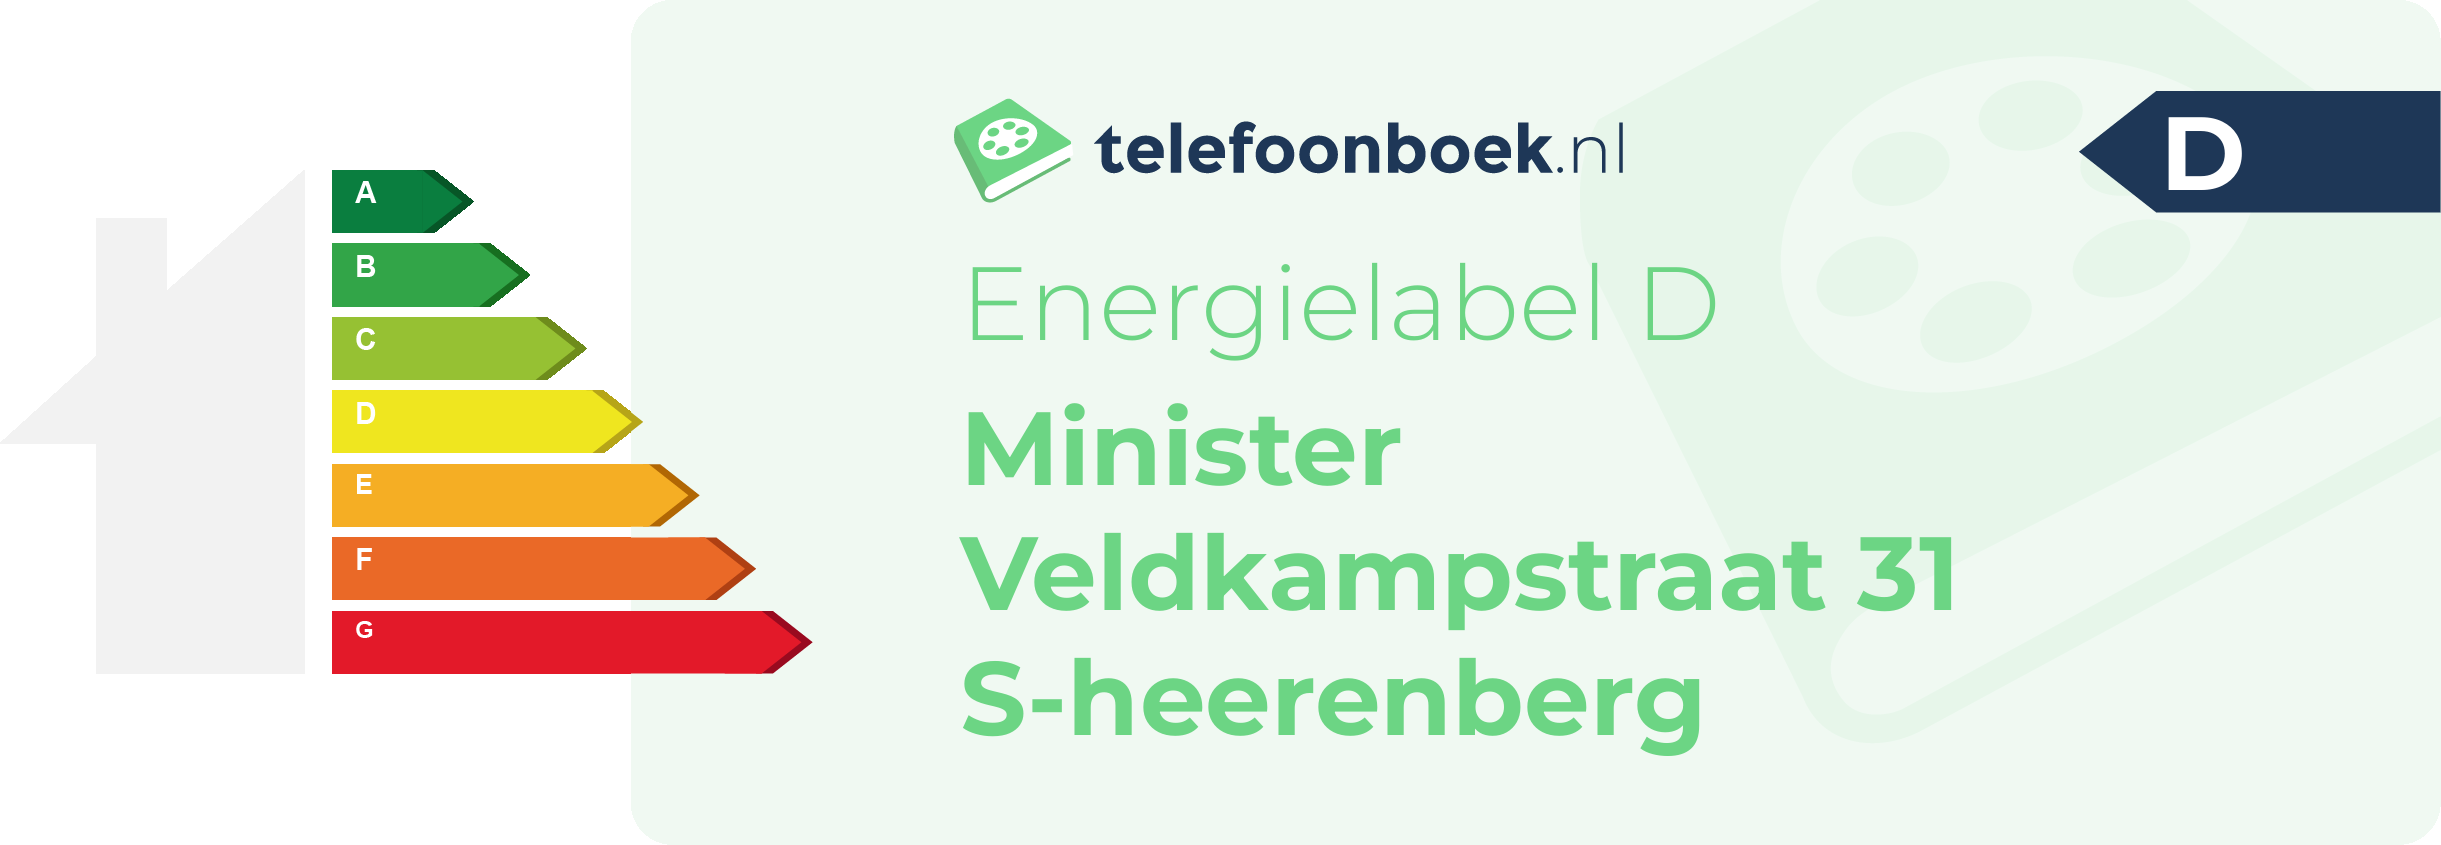 Energielabel Minister Veldkampstraat 31 S-Heerenberg